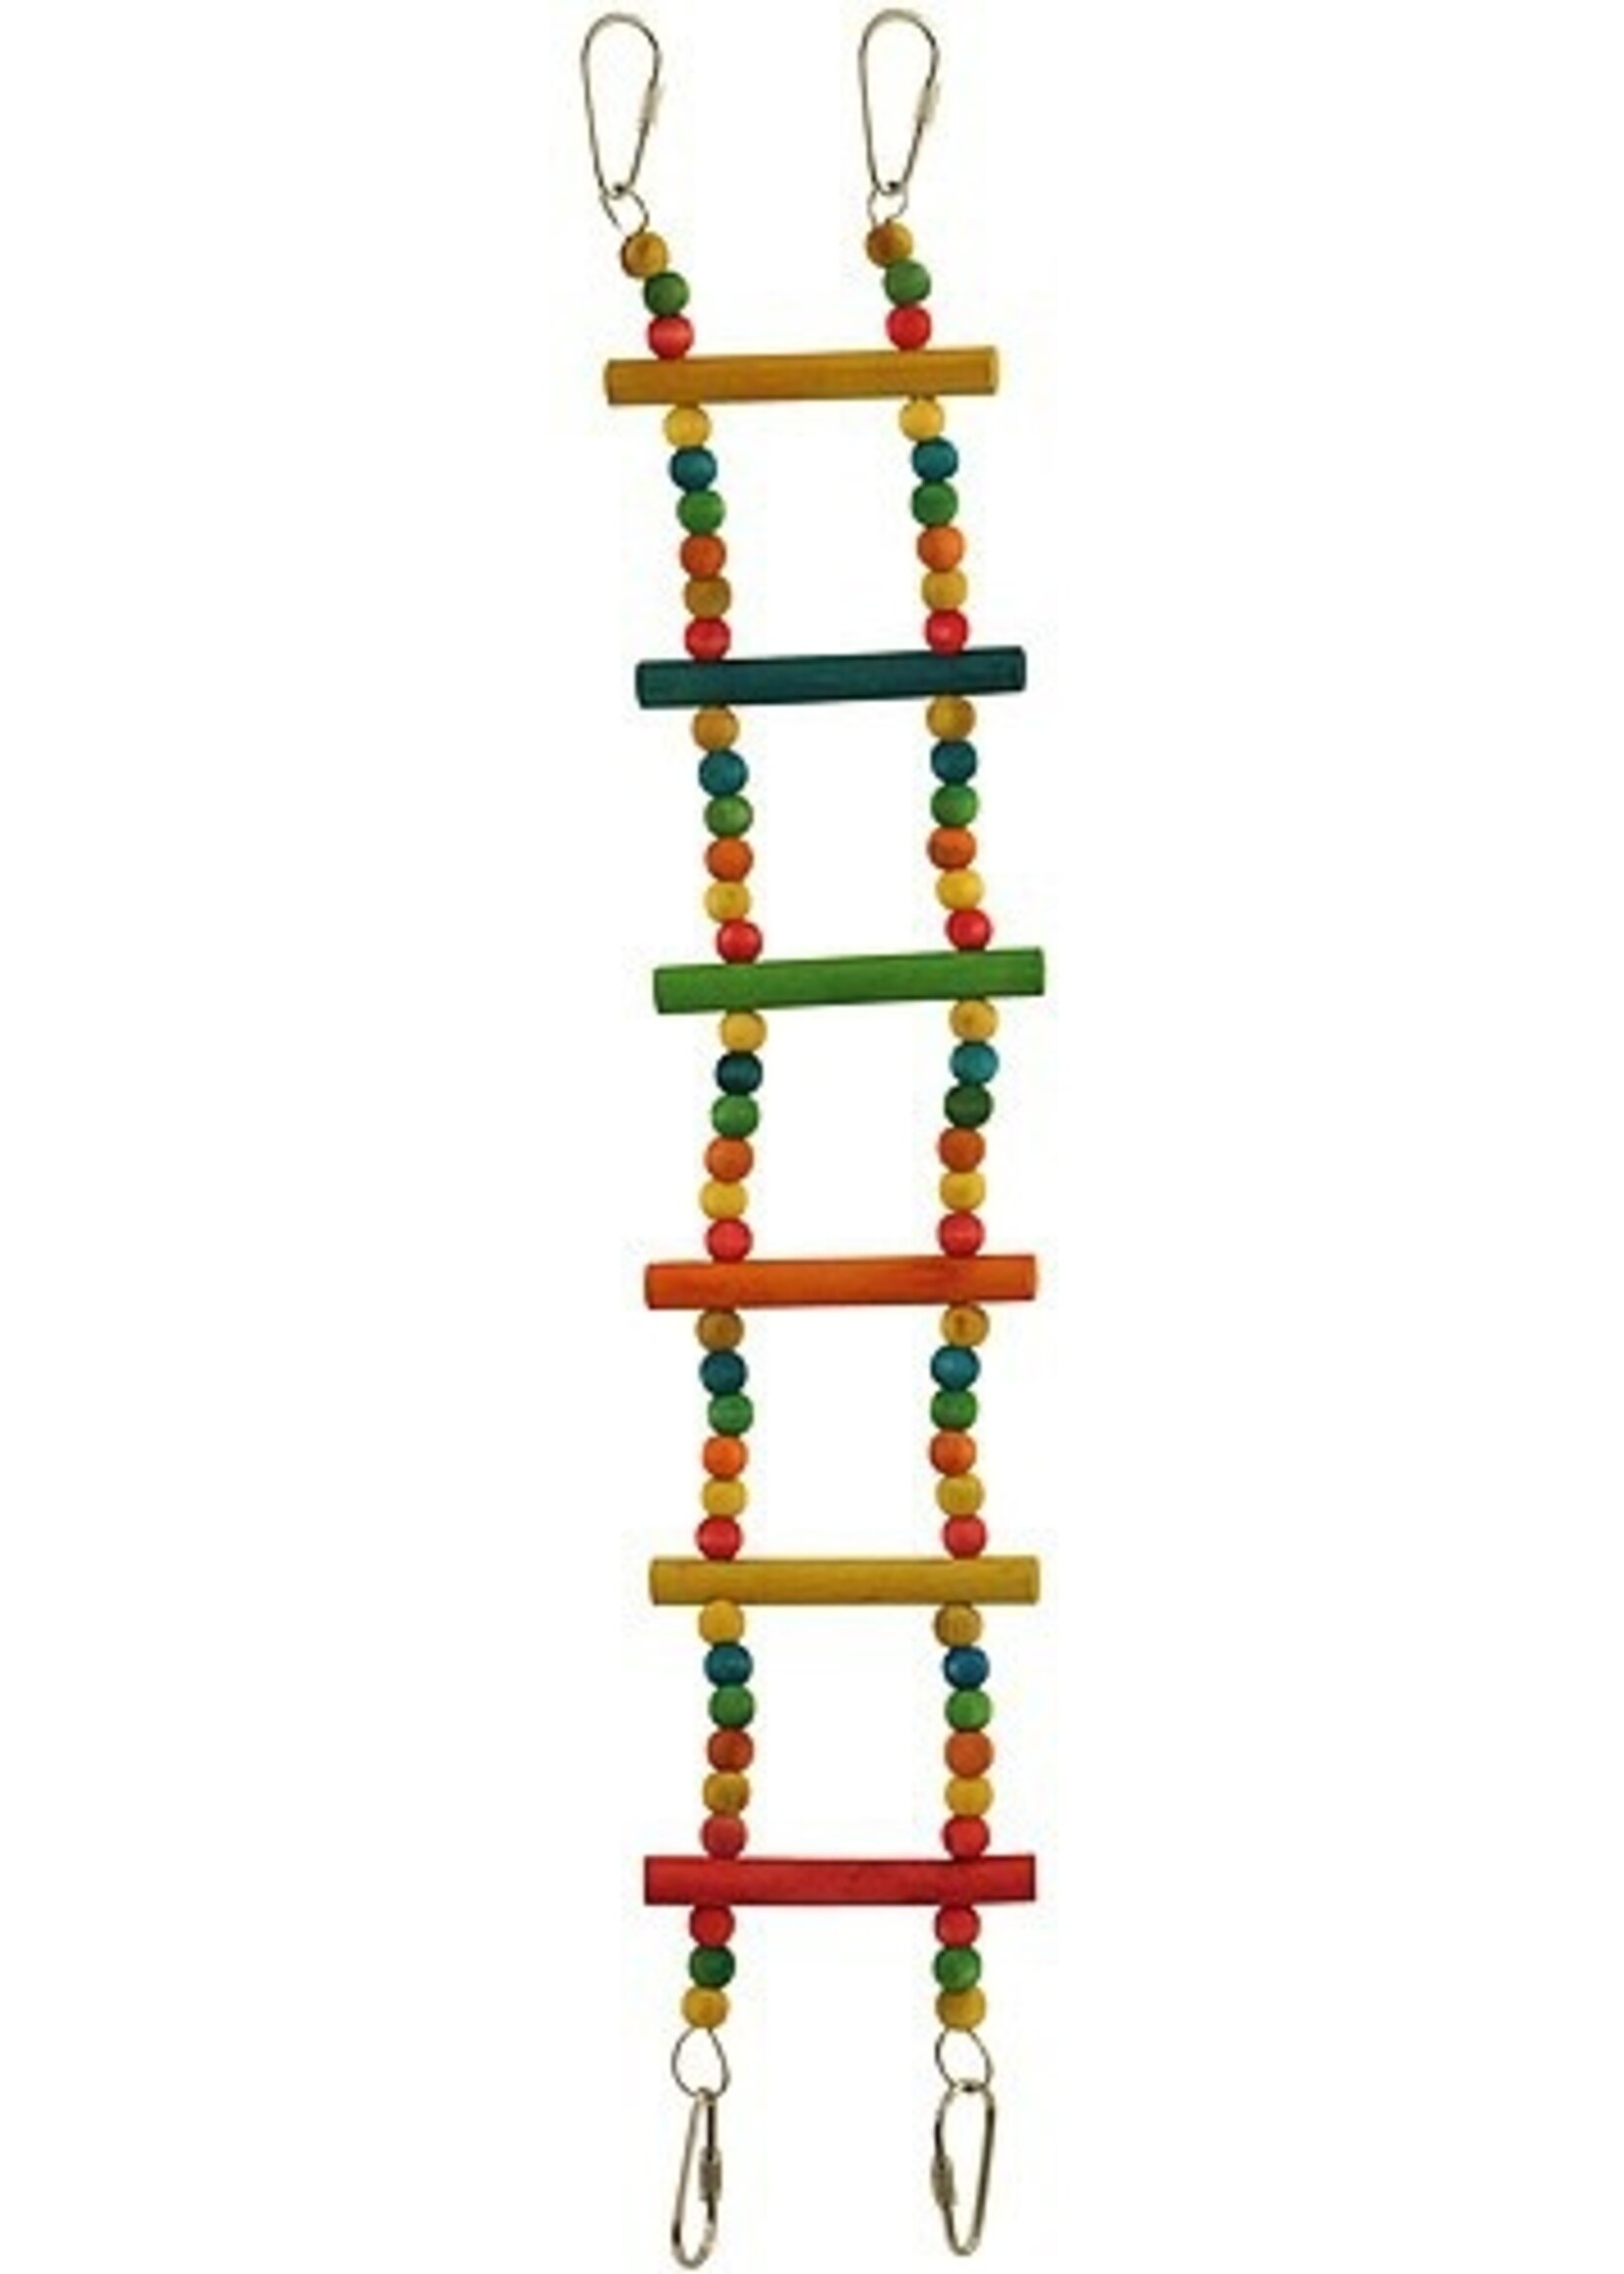 Colloured Bendy Ladder